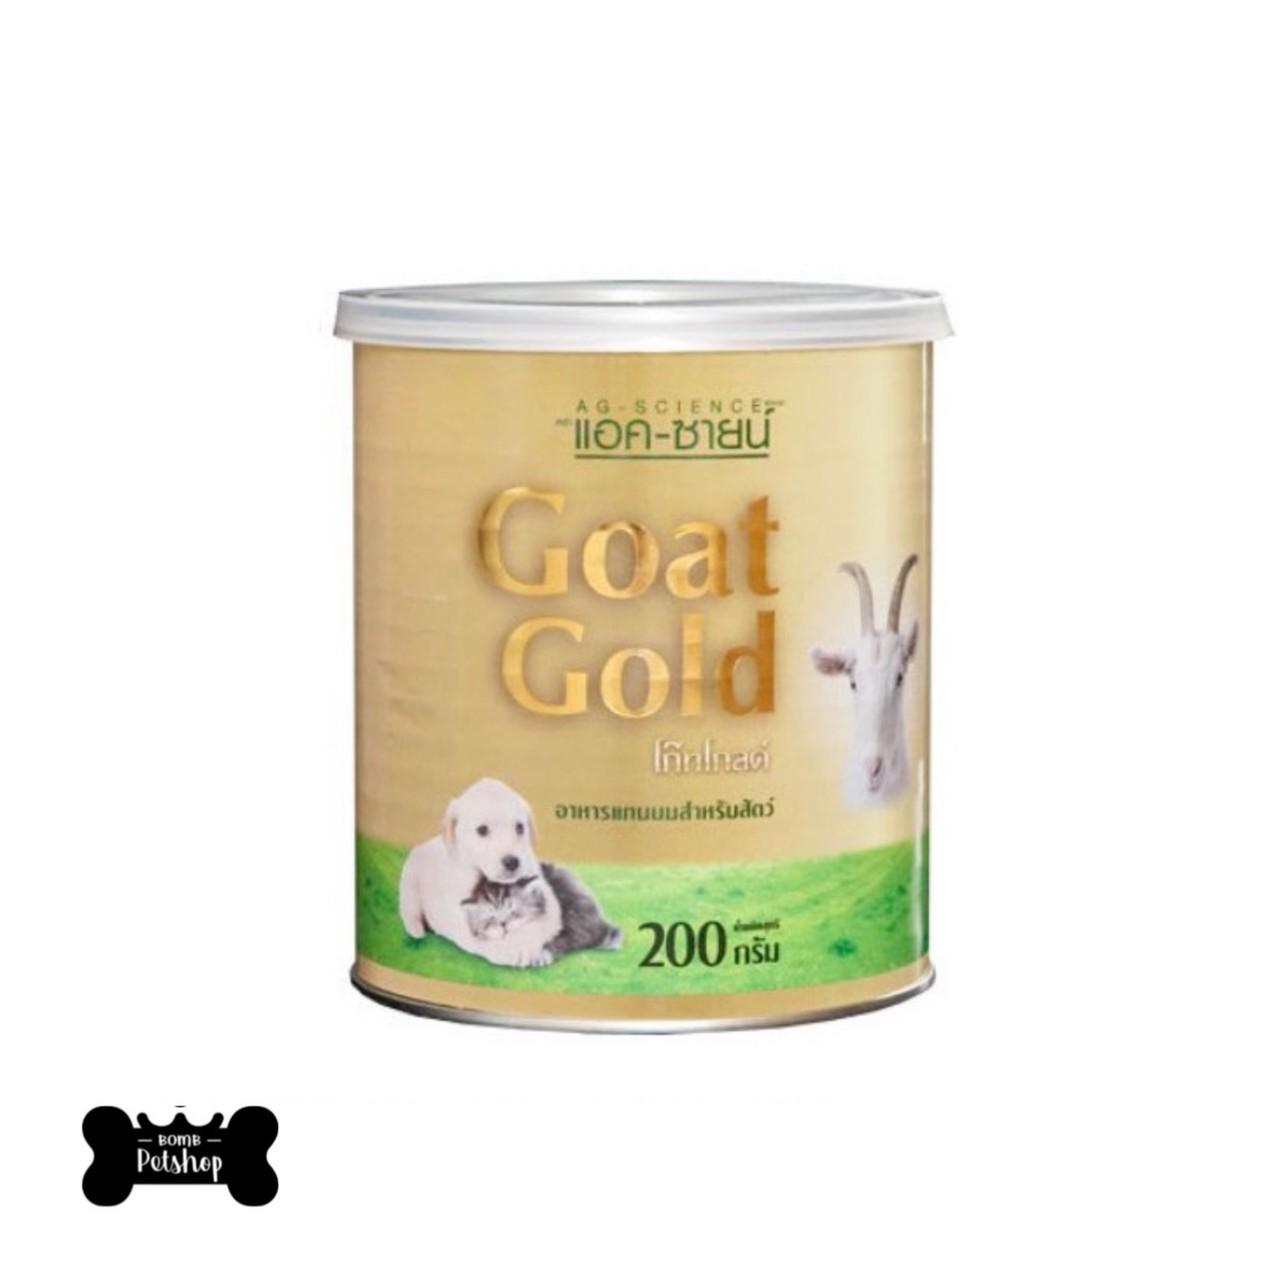 AG-Science Gold แอคซายน์ นมแพะผง สำหรับลูกสุนัข และลูกแมว  ขนาด 200g